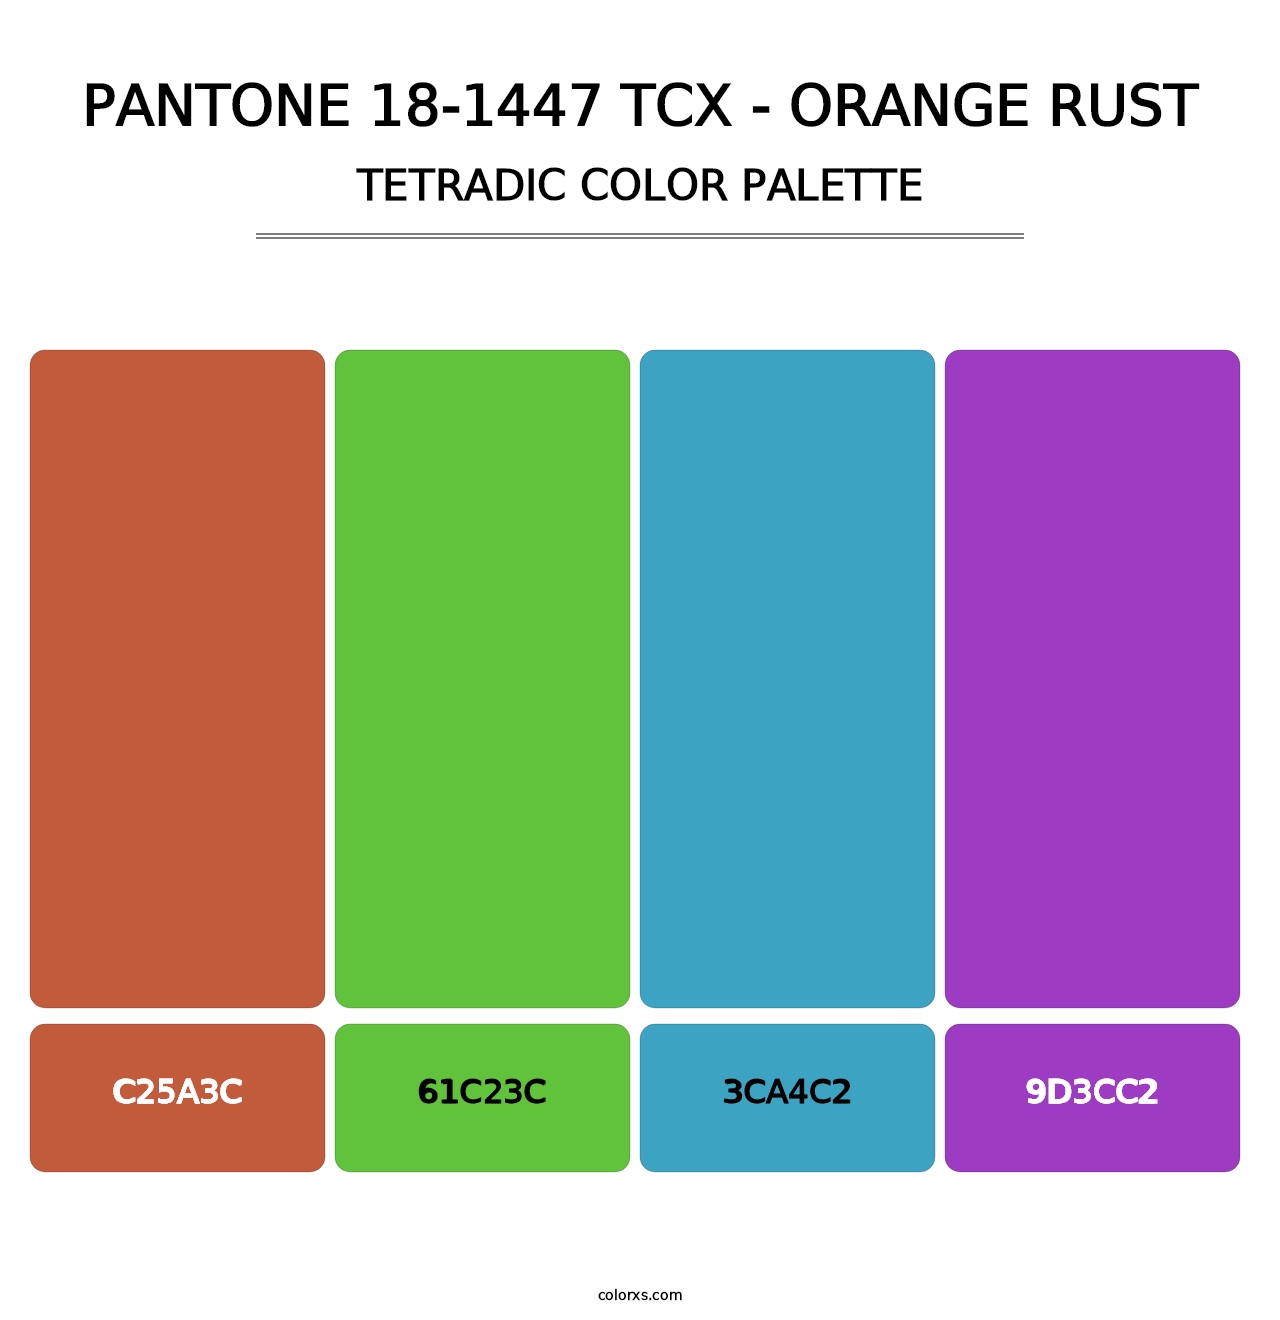 PANTONE 18-1447 TCX - Orange Rust - Tetradic Color Palette